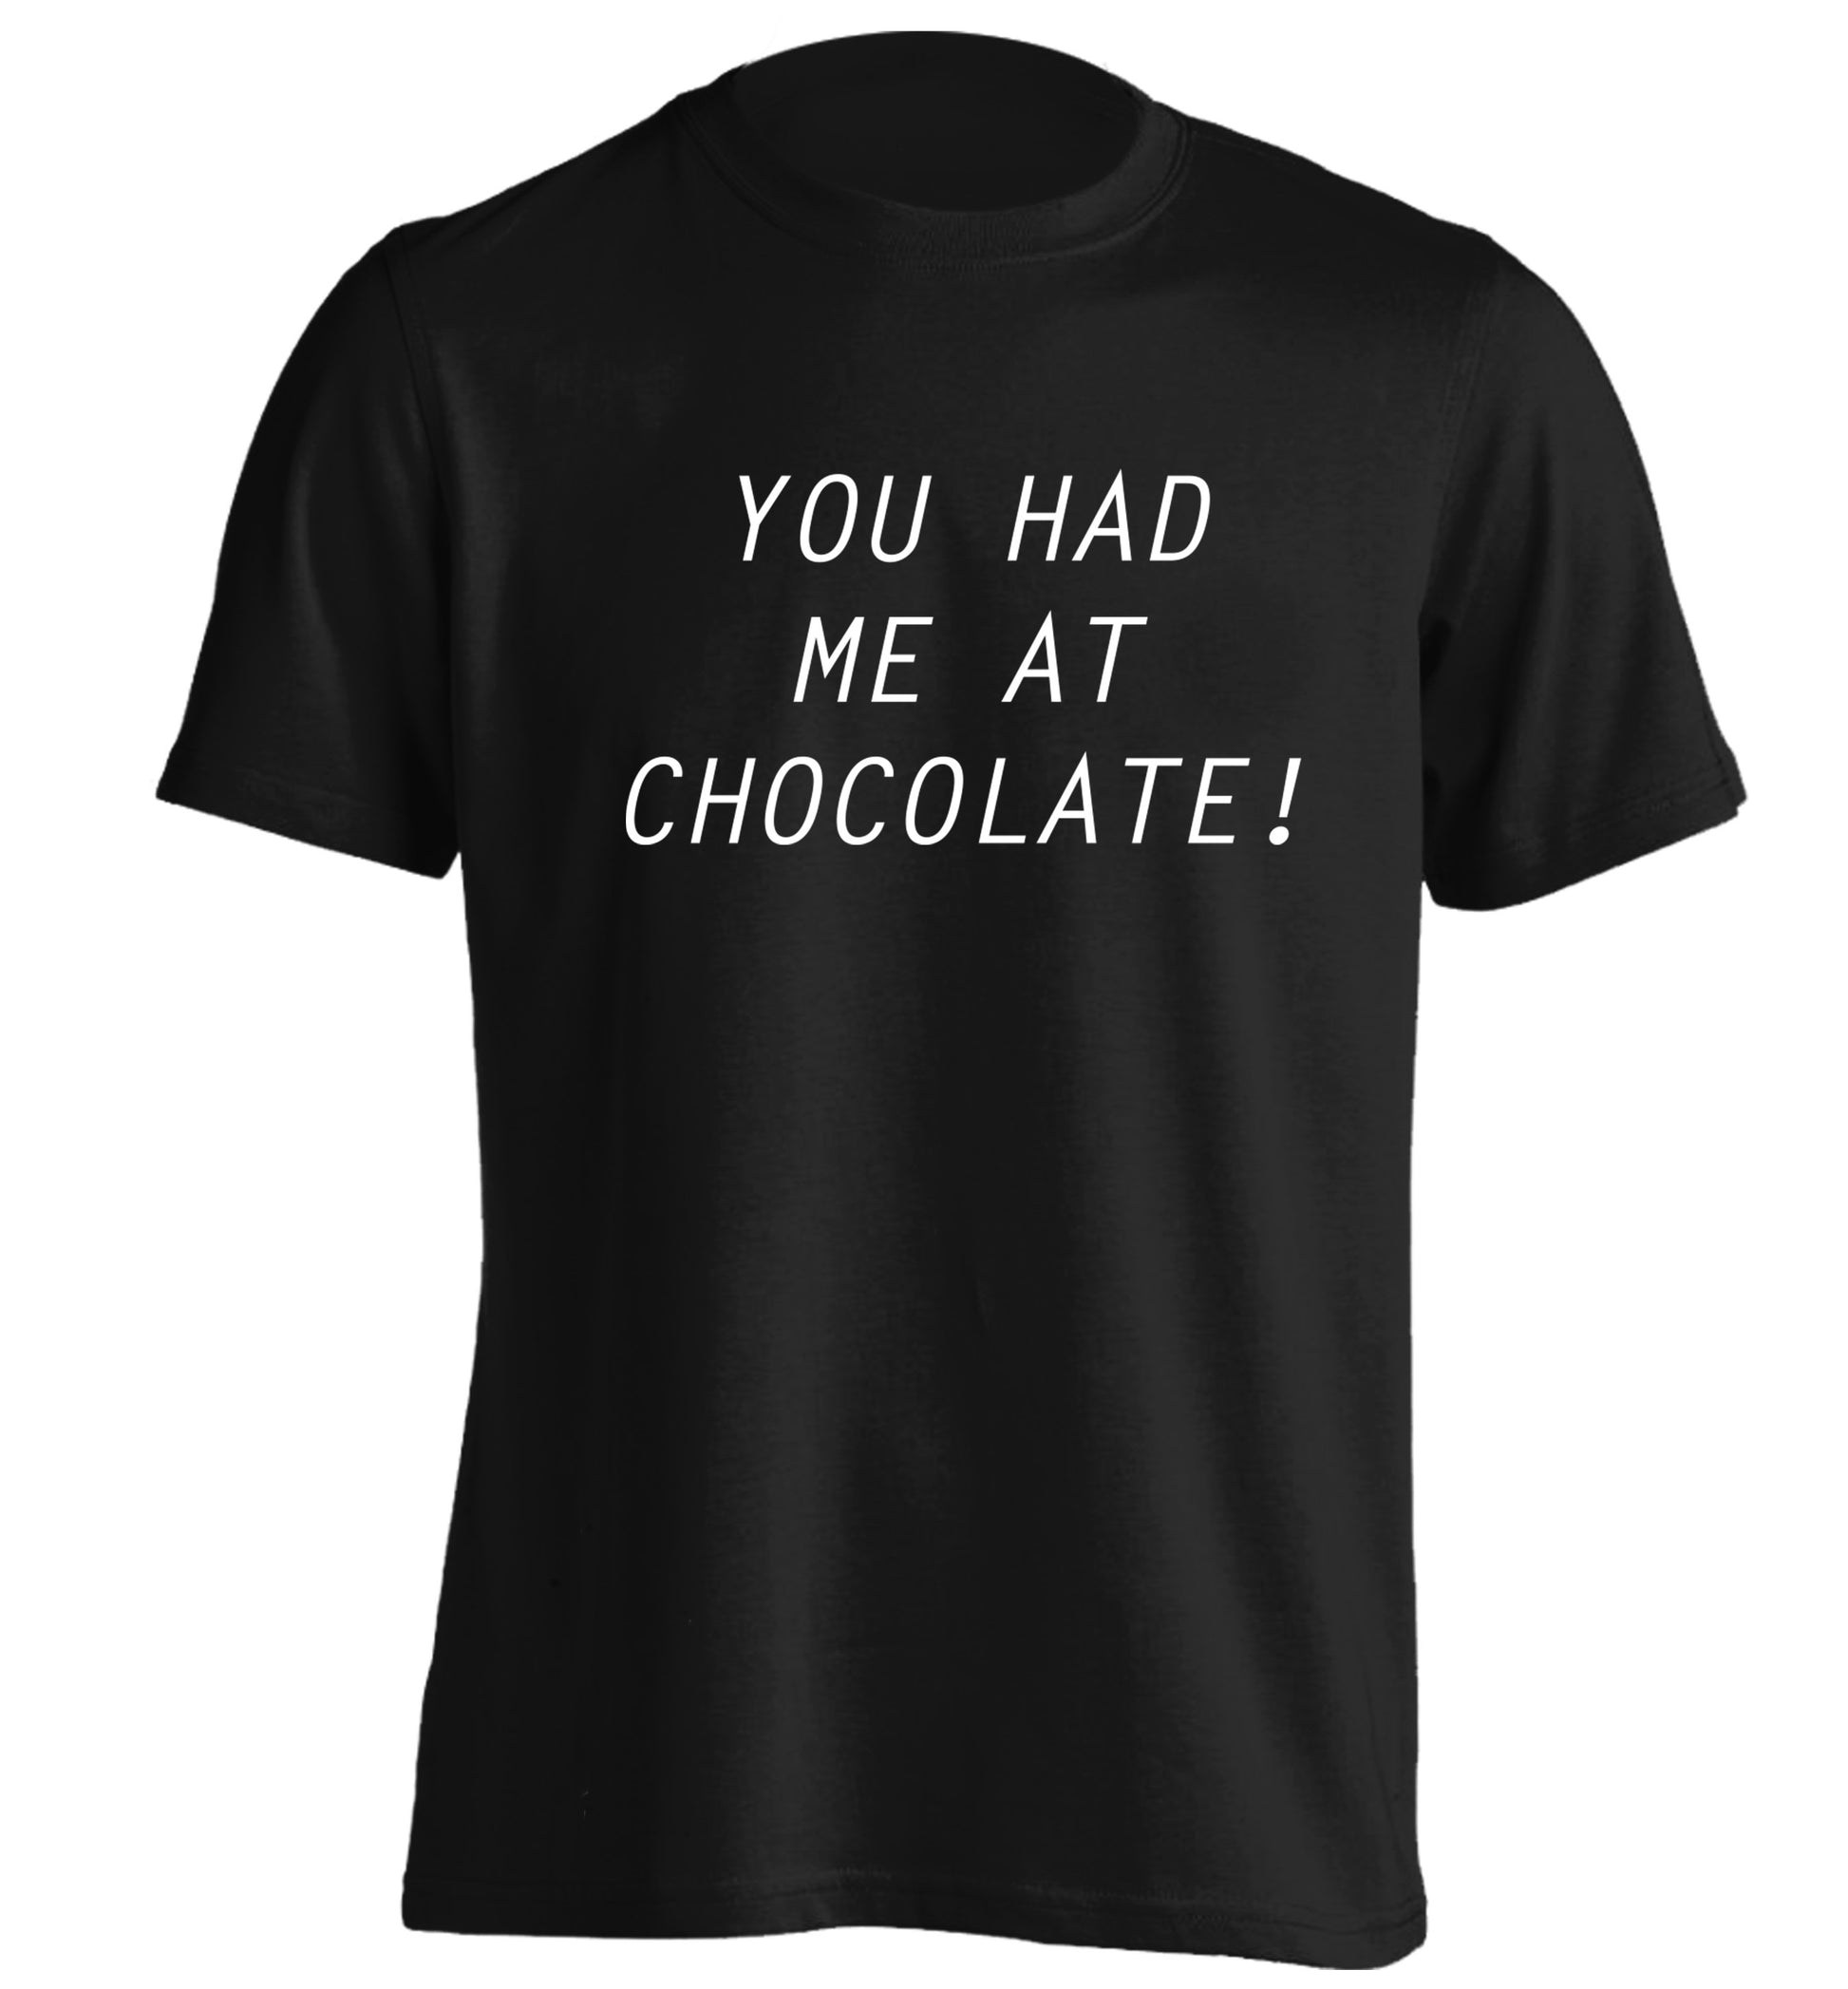 You had me at chocolate adults unisex black Tshirt 2XL